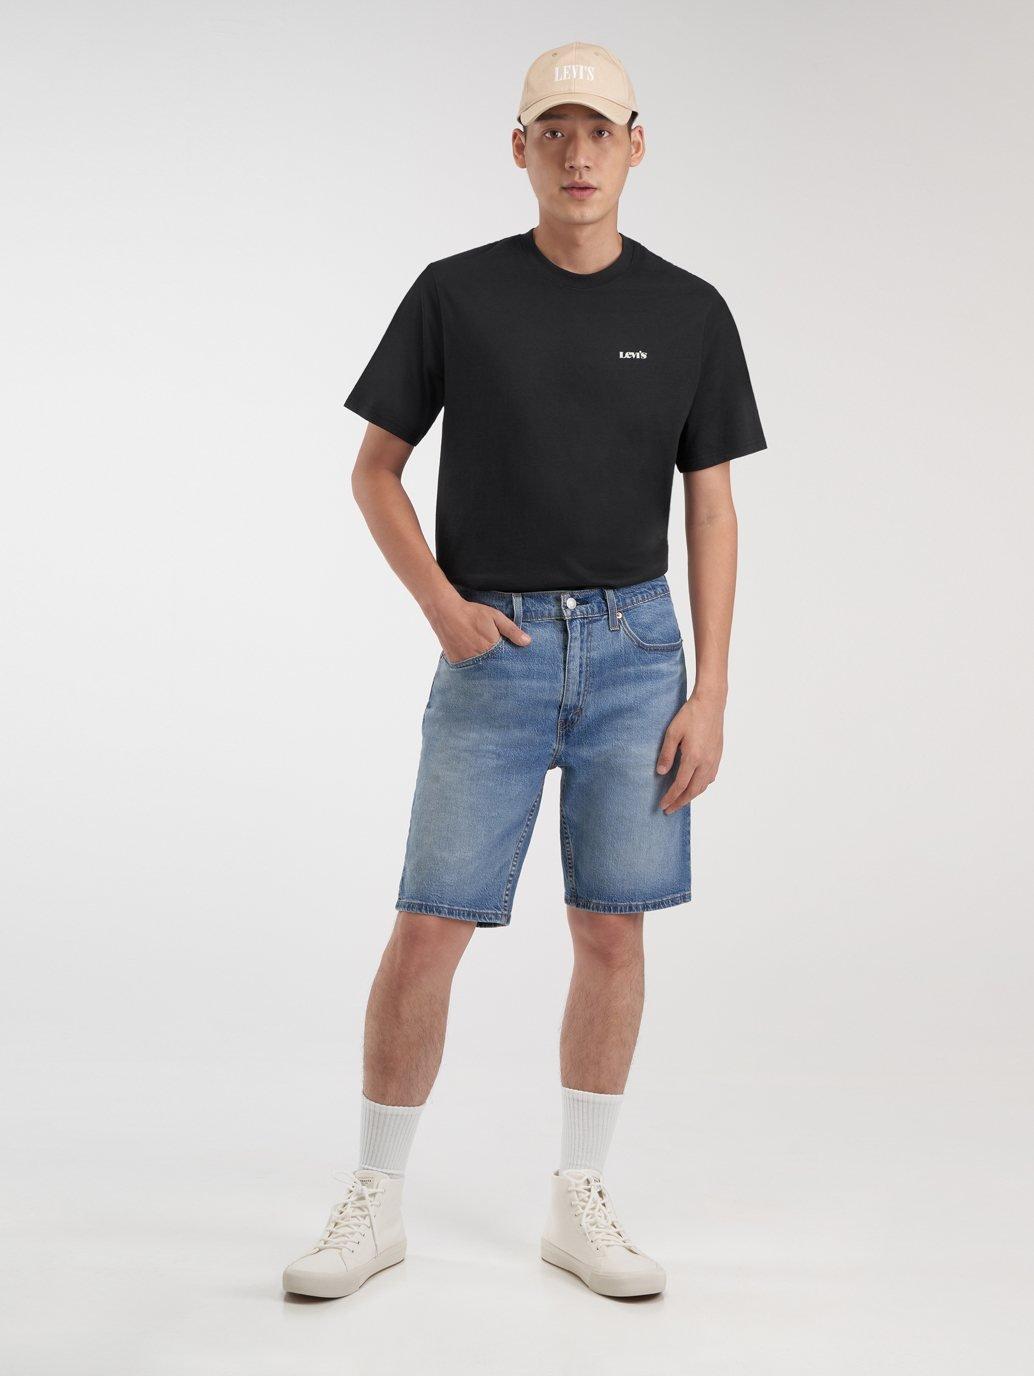 levis singapore mens standard jean shorts 398640006 10 Model Front